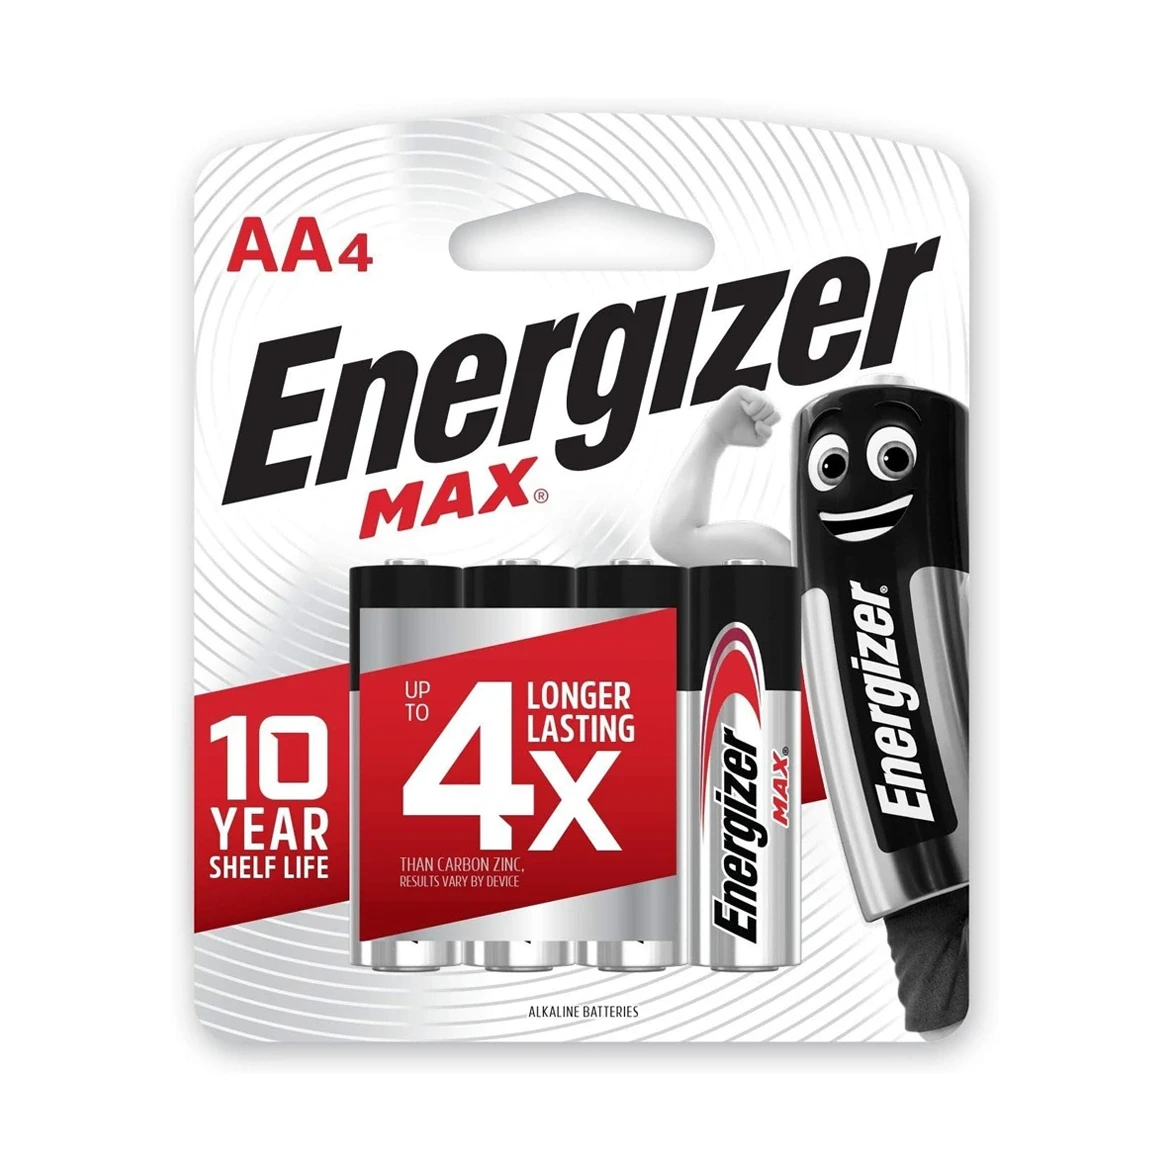 Energizer 4 AA Max Blister Card - حجر قلم 4